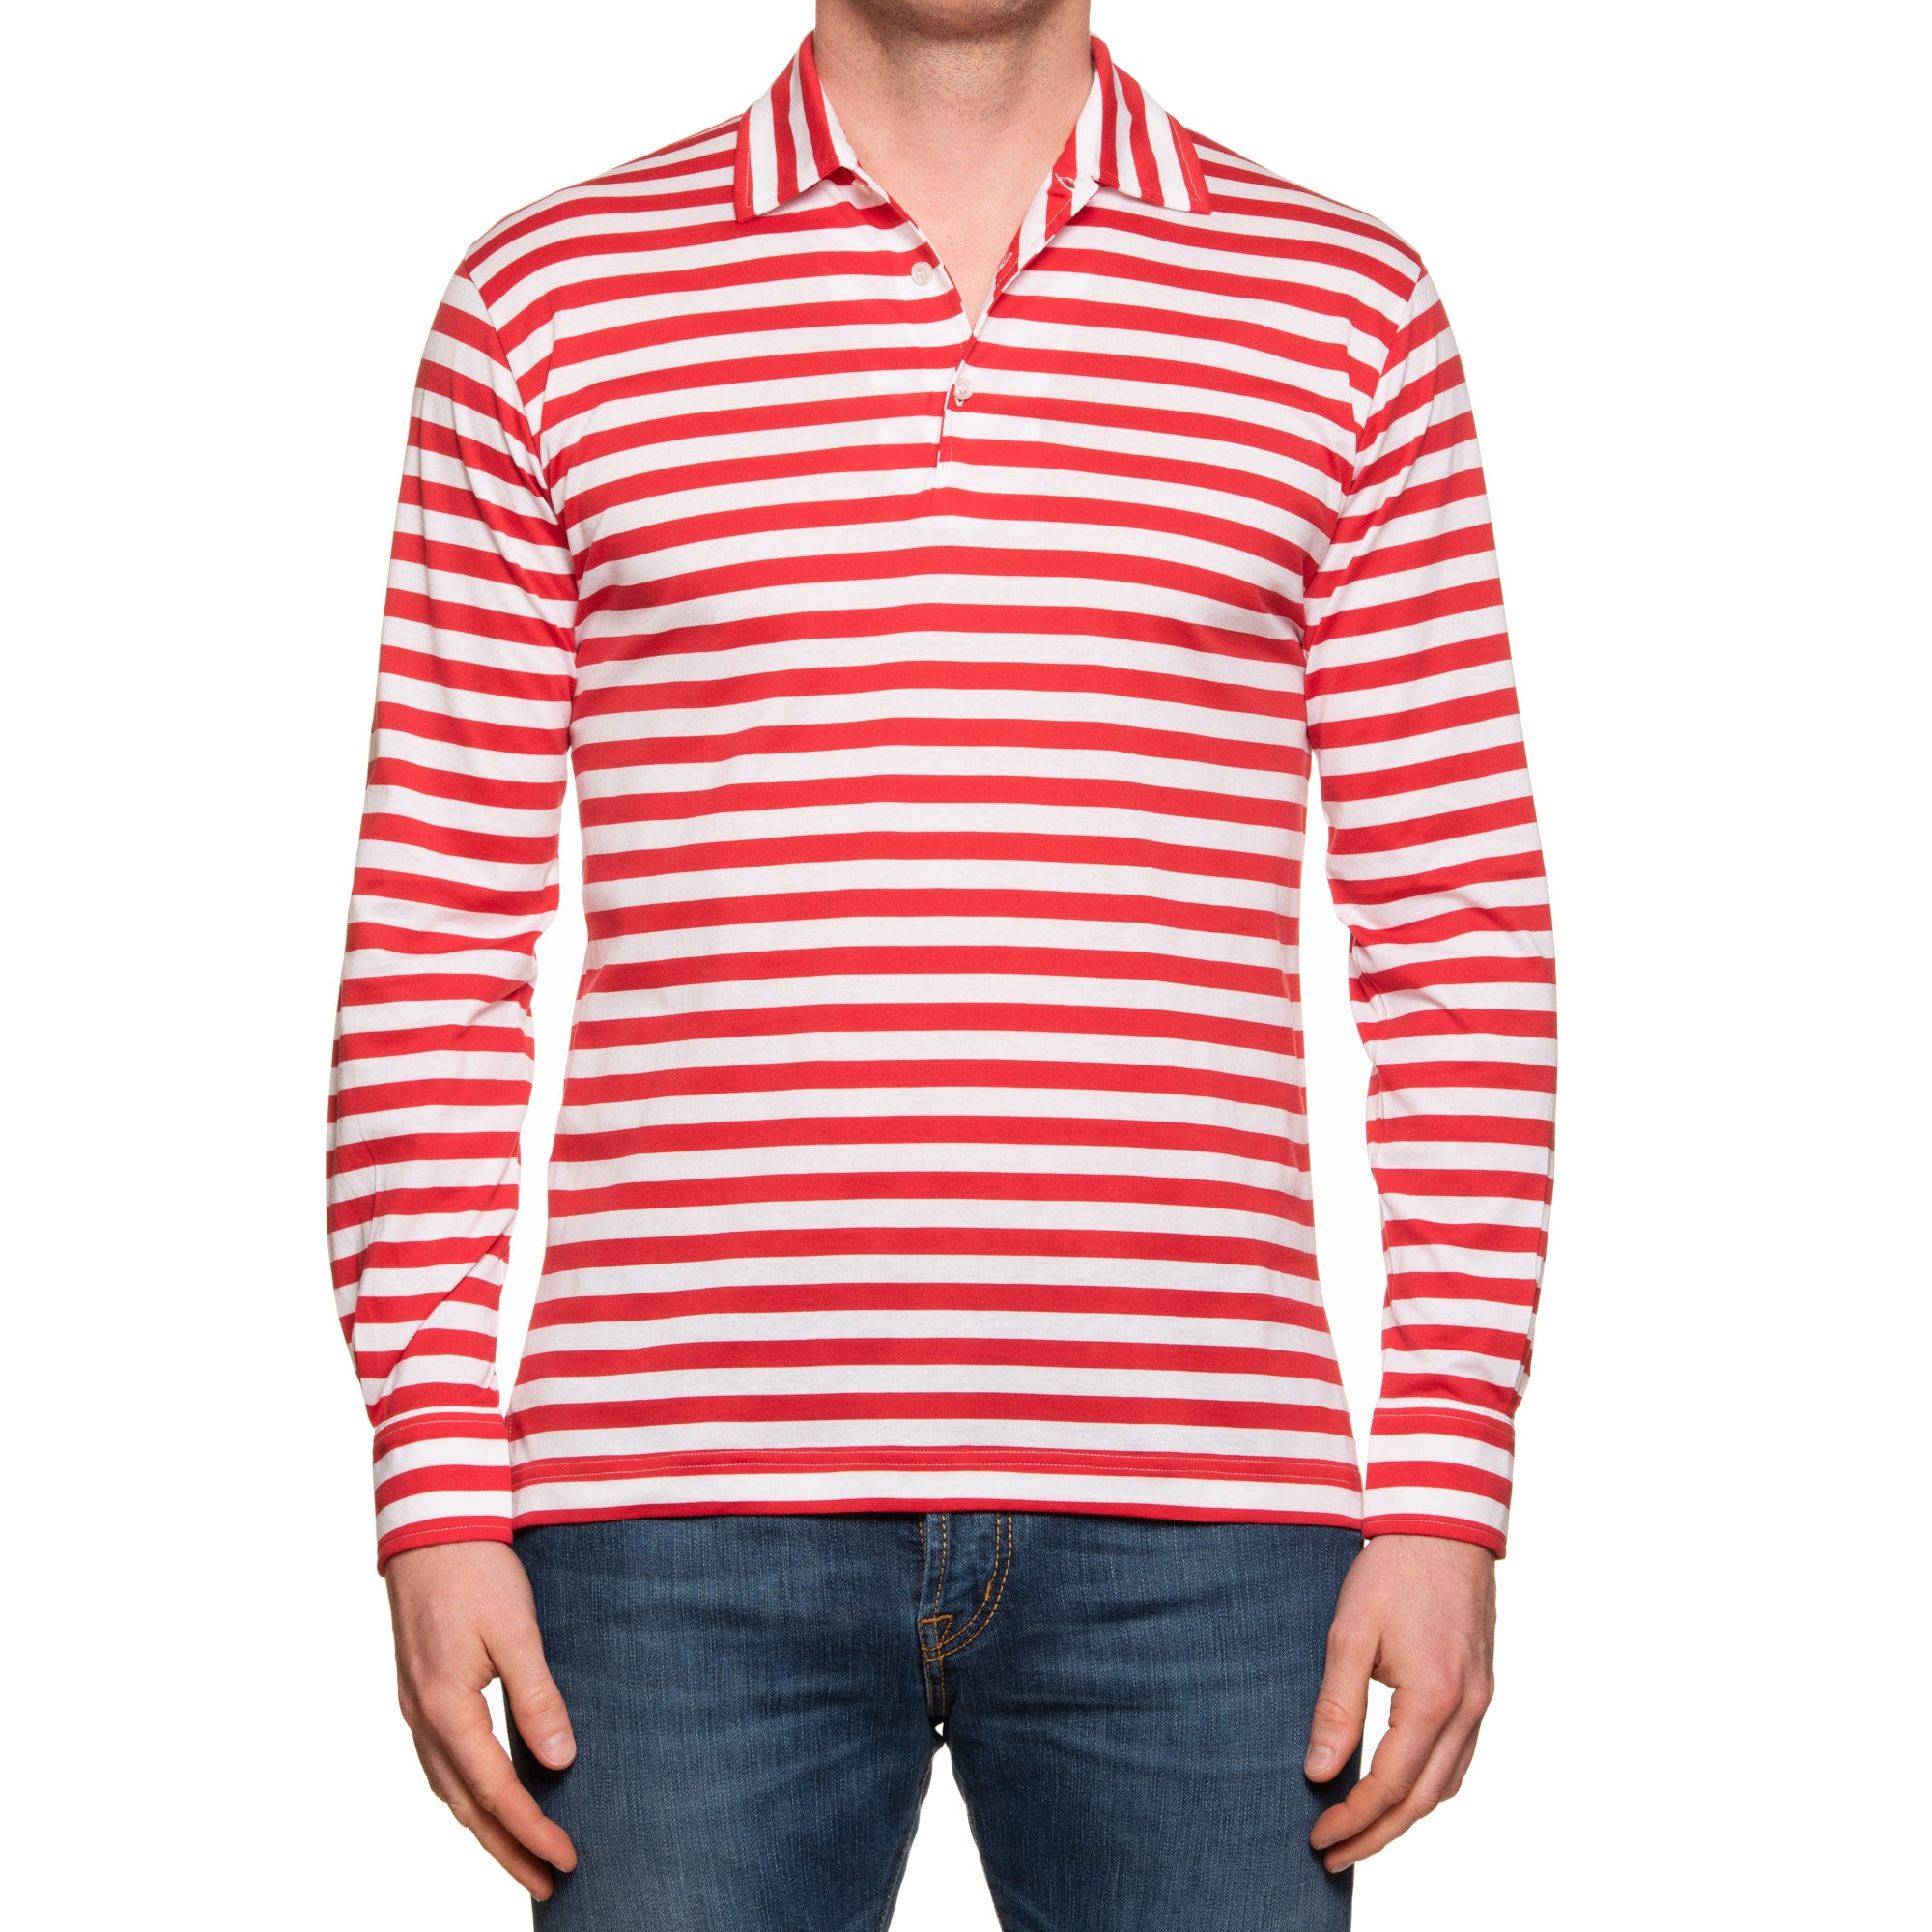 FEDELI "Libeccio" Red Striped Cotton Jersey Long Sleeve Polo Shirt EU 50 NEW US M FEDELI